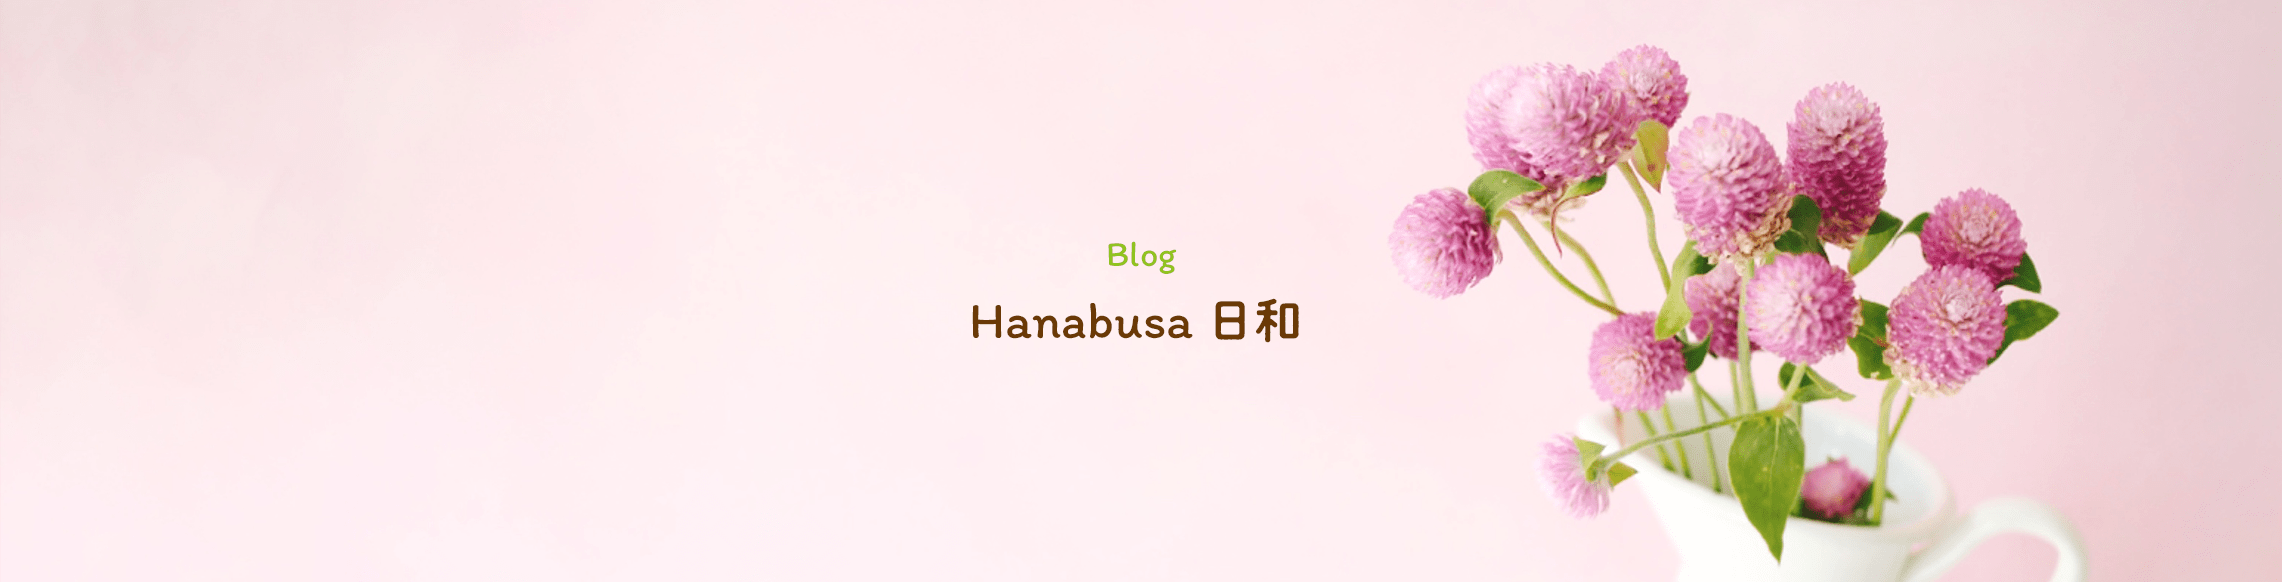 Hanabusa日記